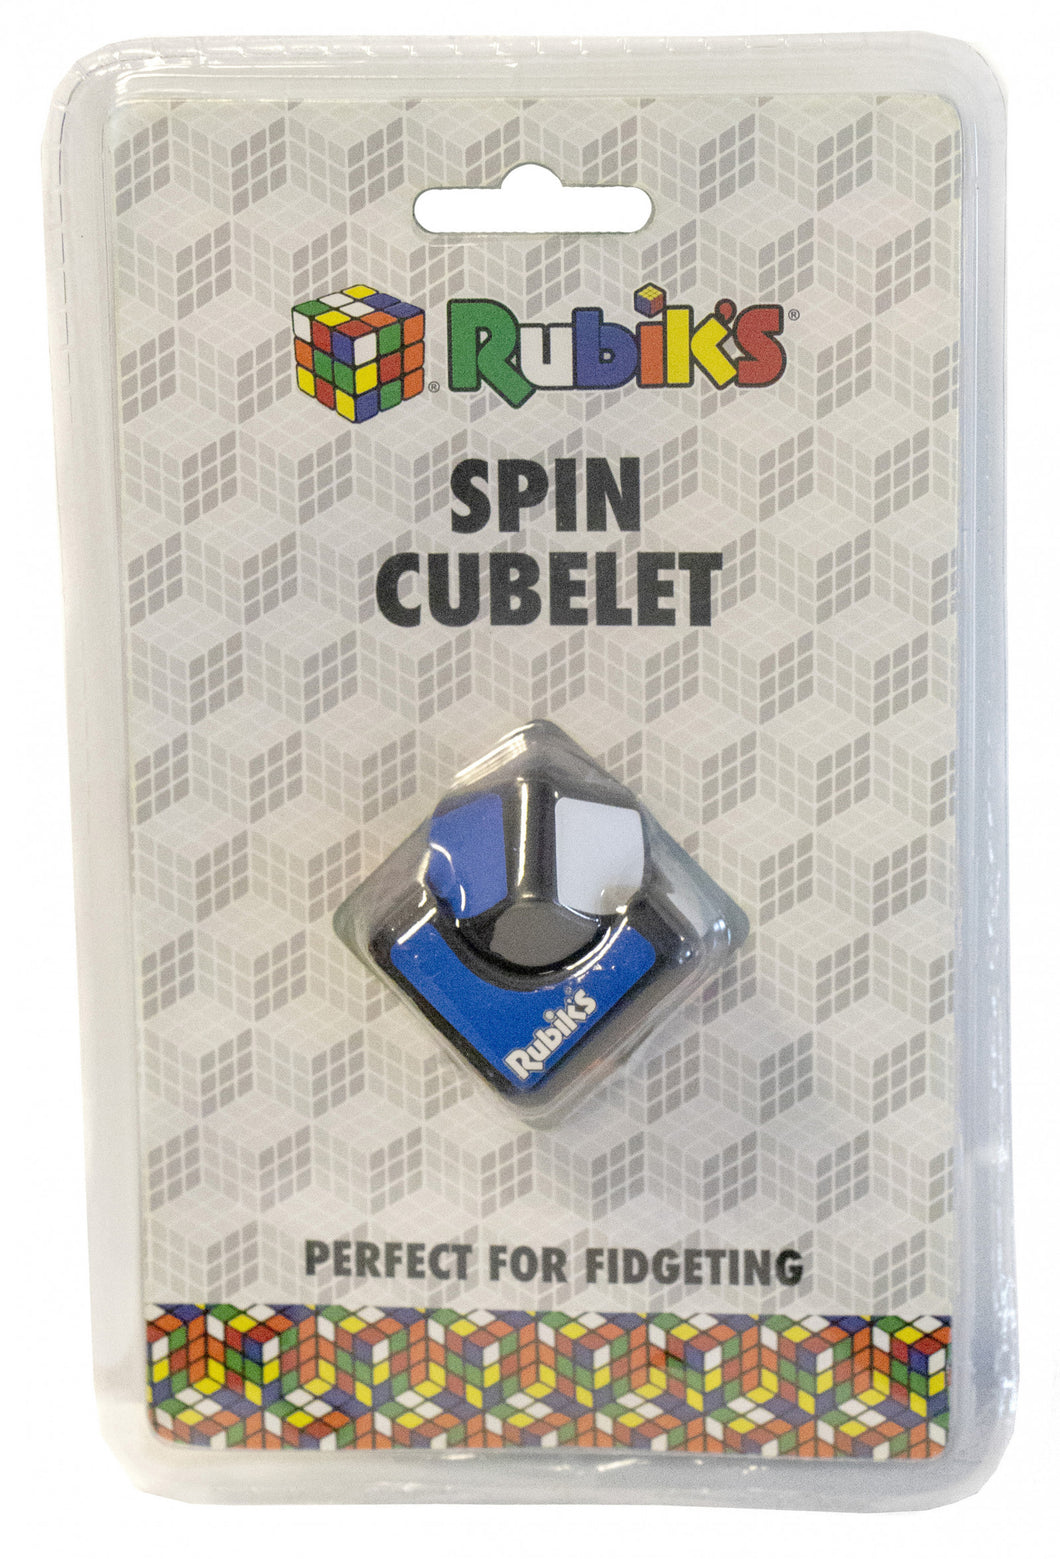 Rubiks Spin Cubelet Fidget Toy